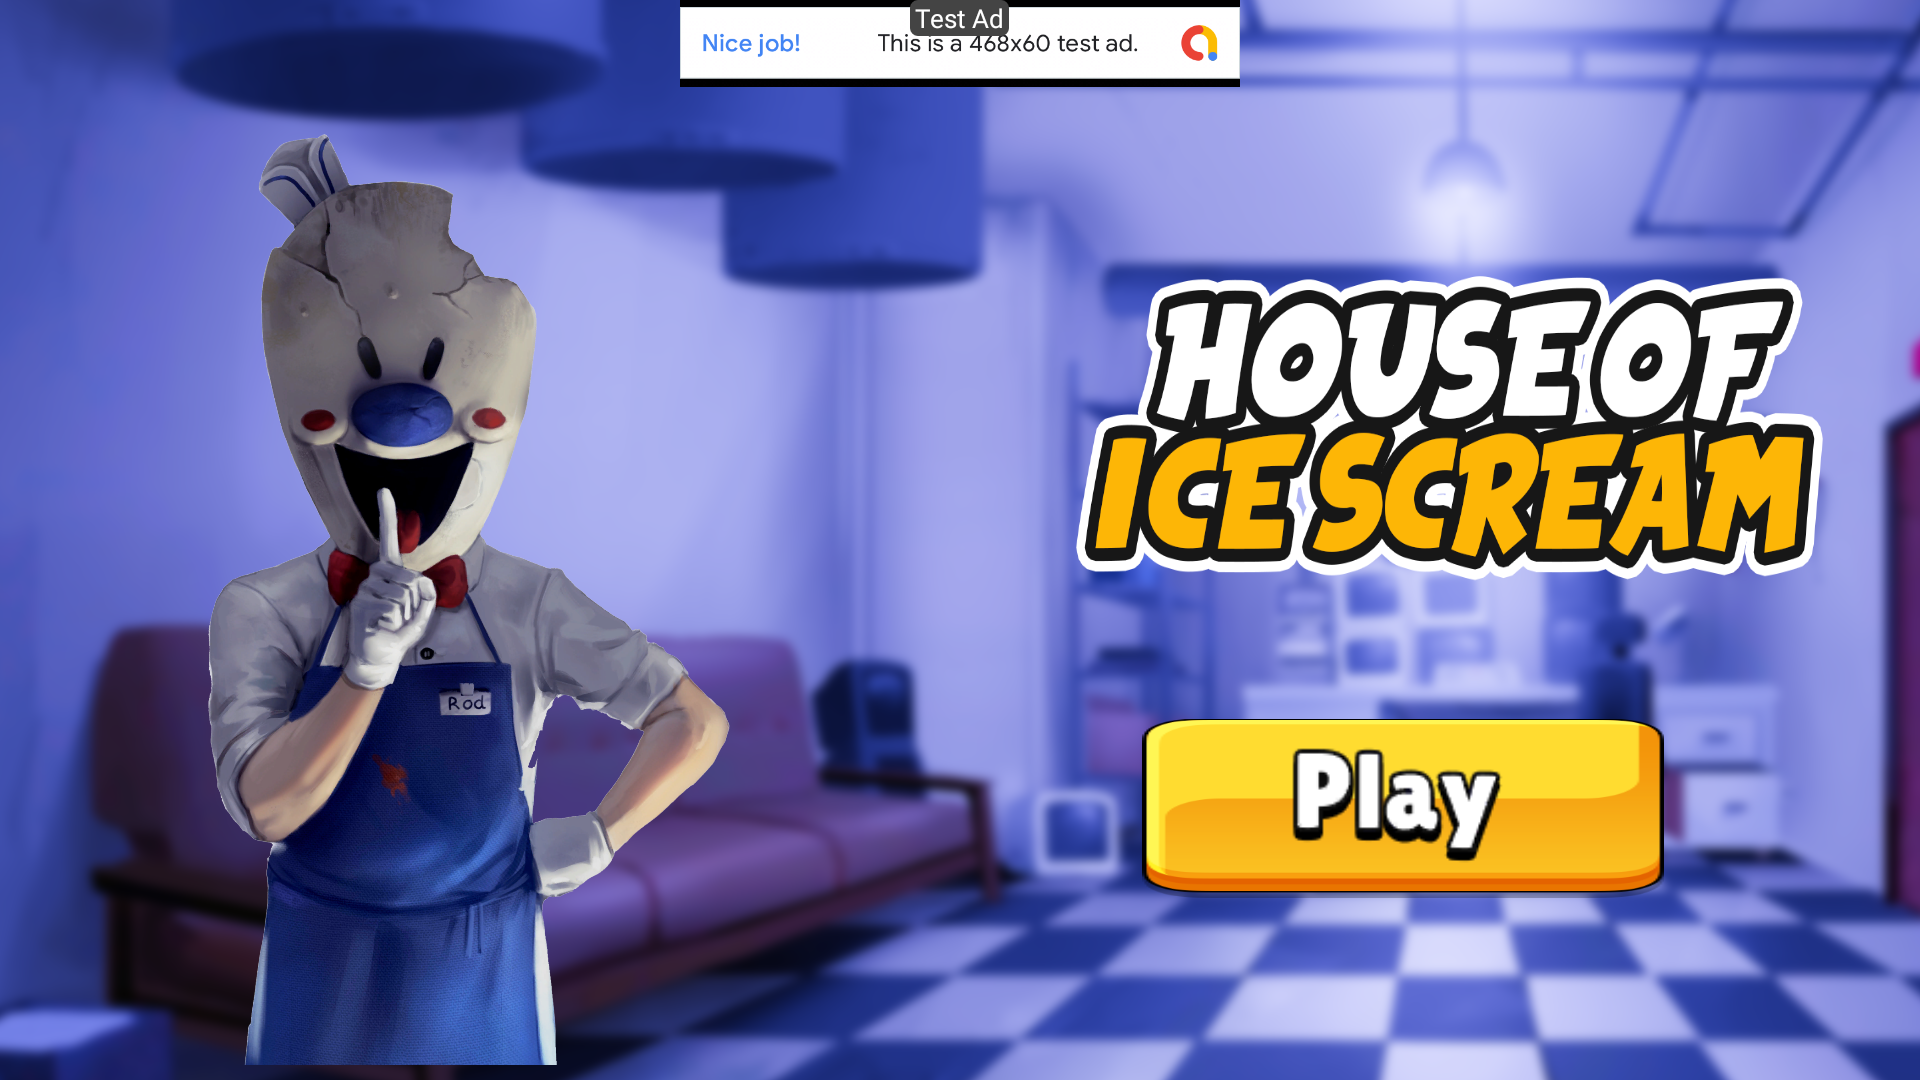 Ice Horror Scream House